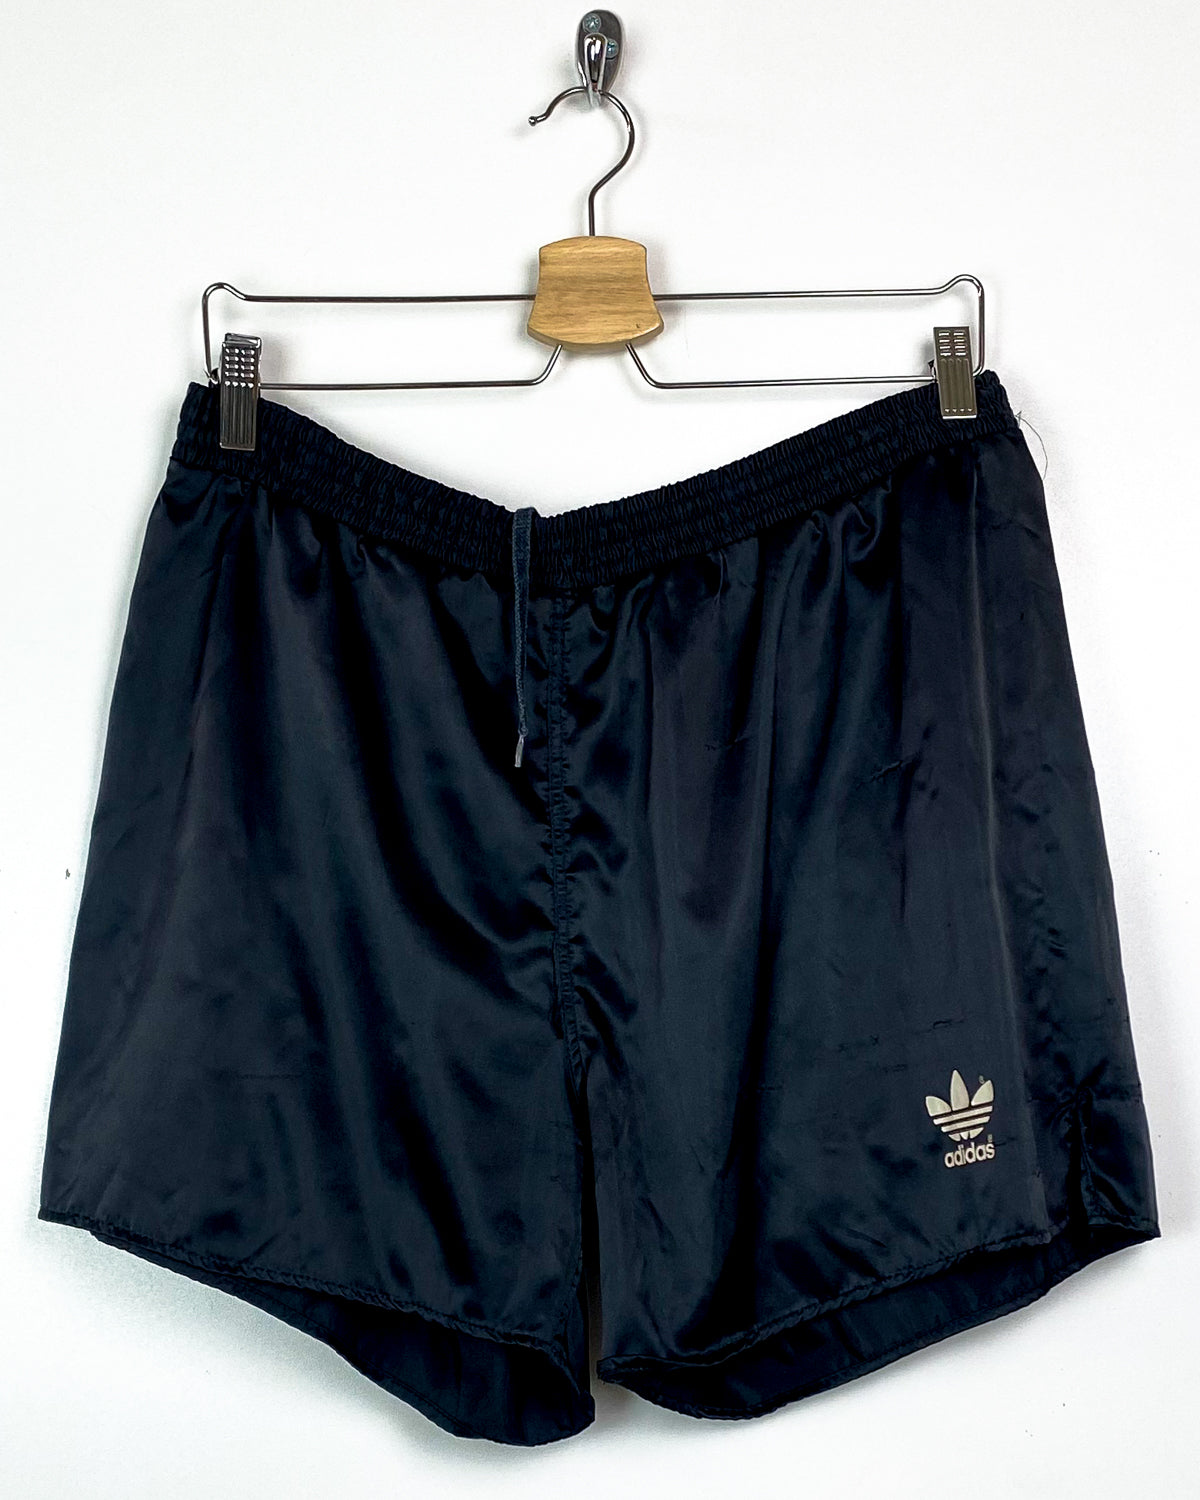 Adidas - Shorts Vintage Ampi Taglia L